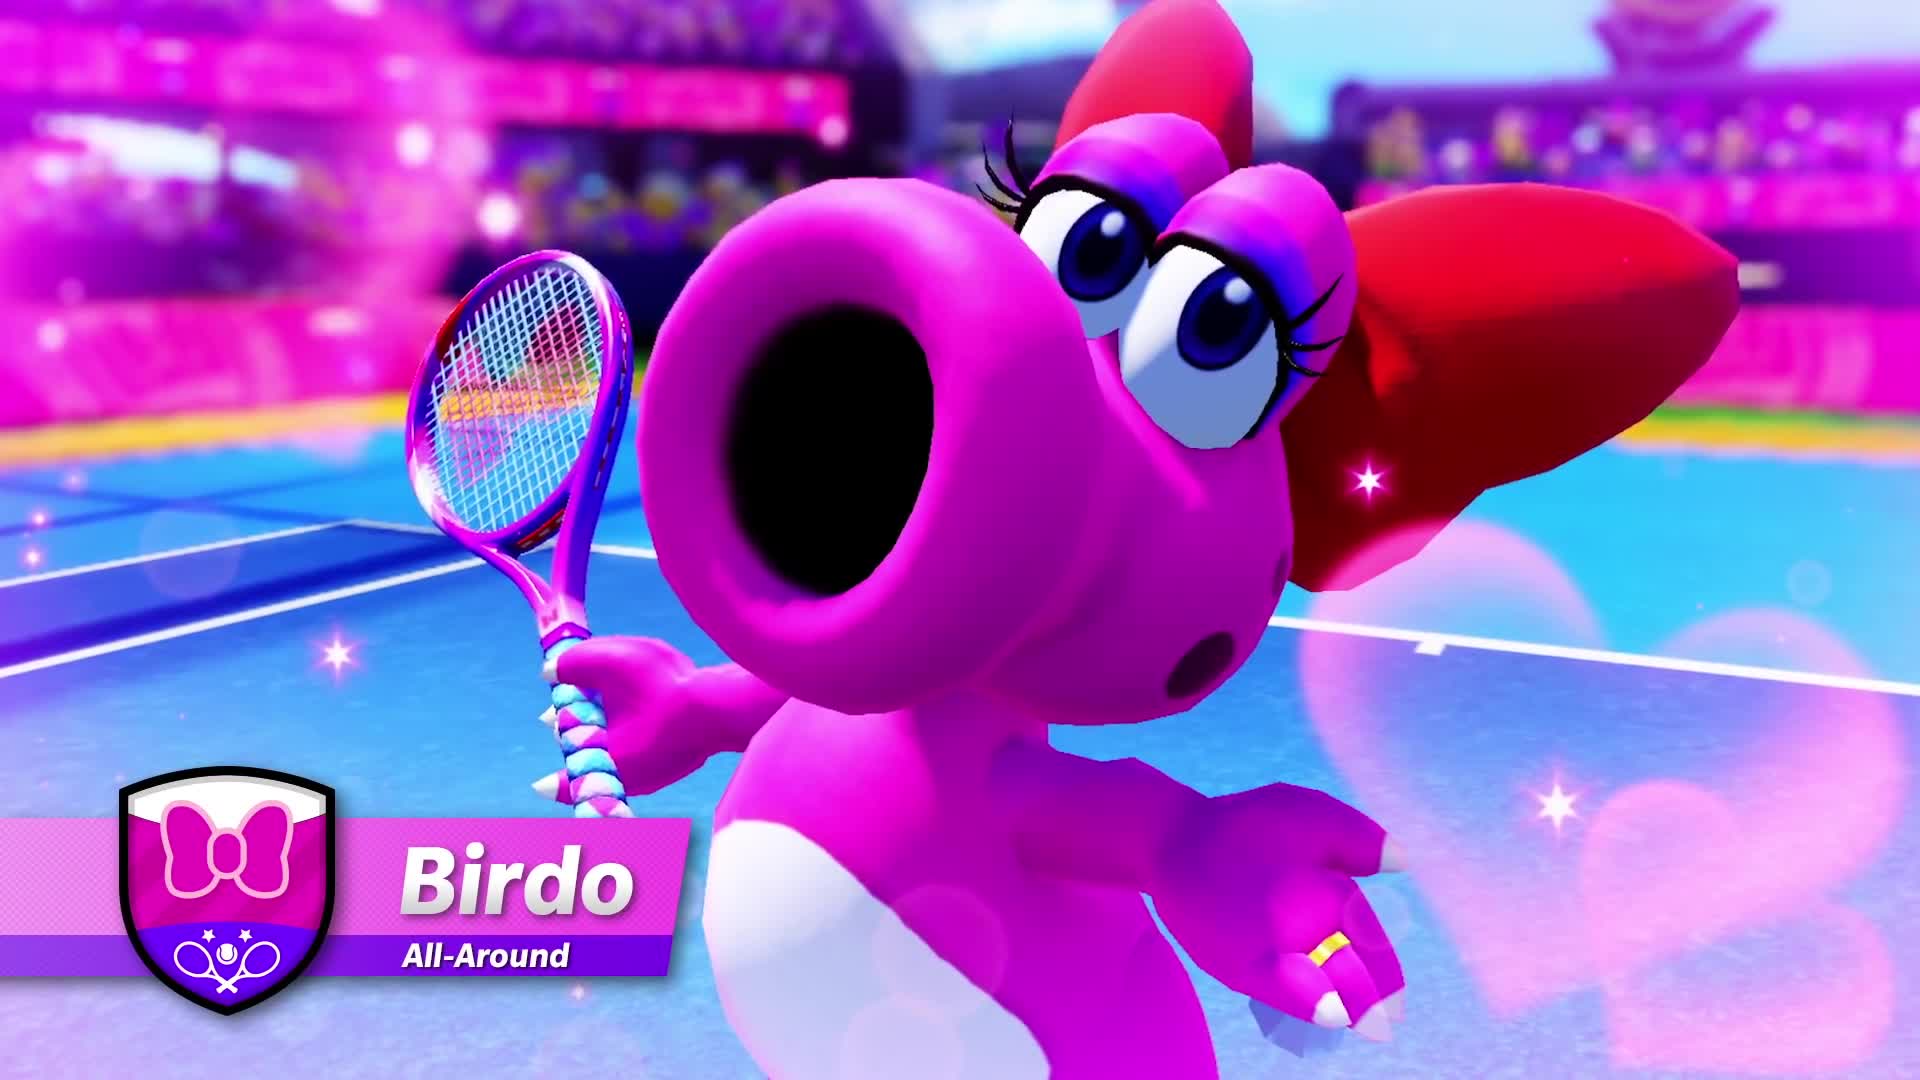 Mario Tennis Aces - Birdo trailer